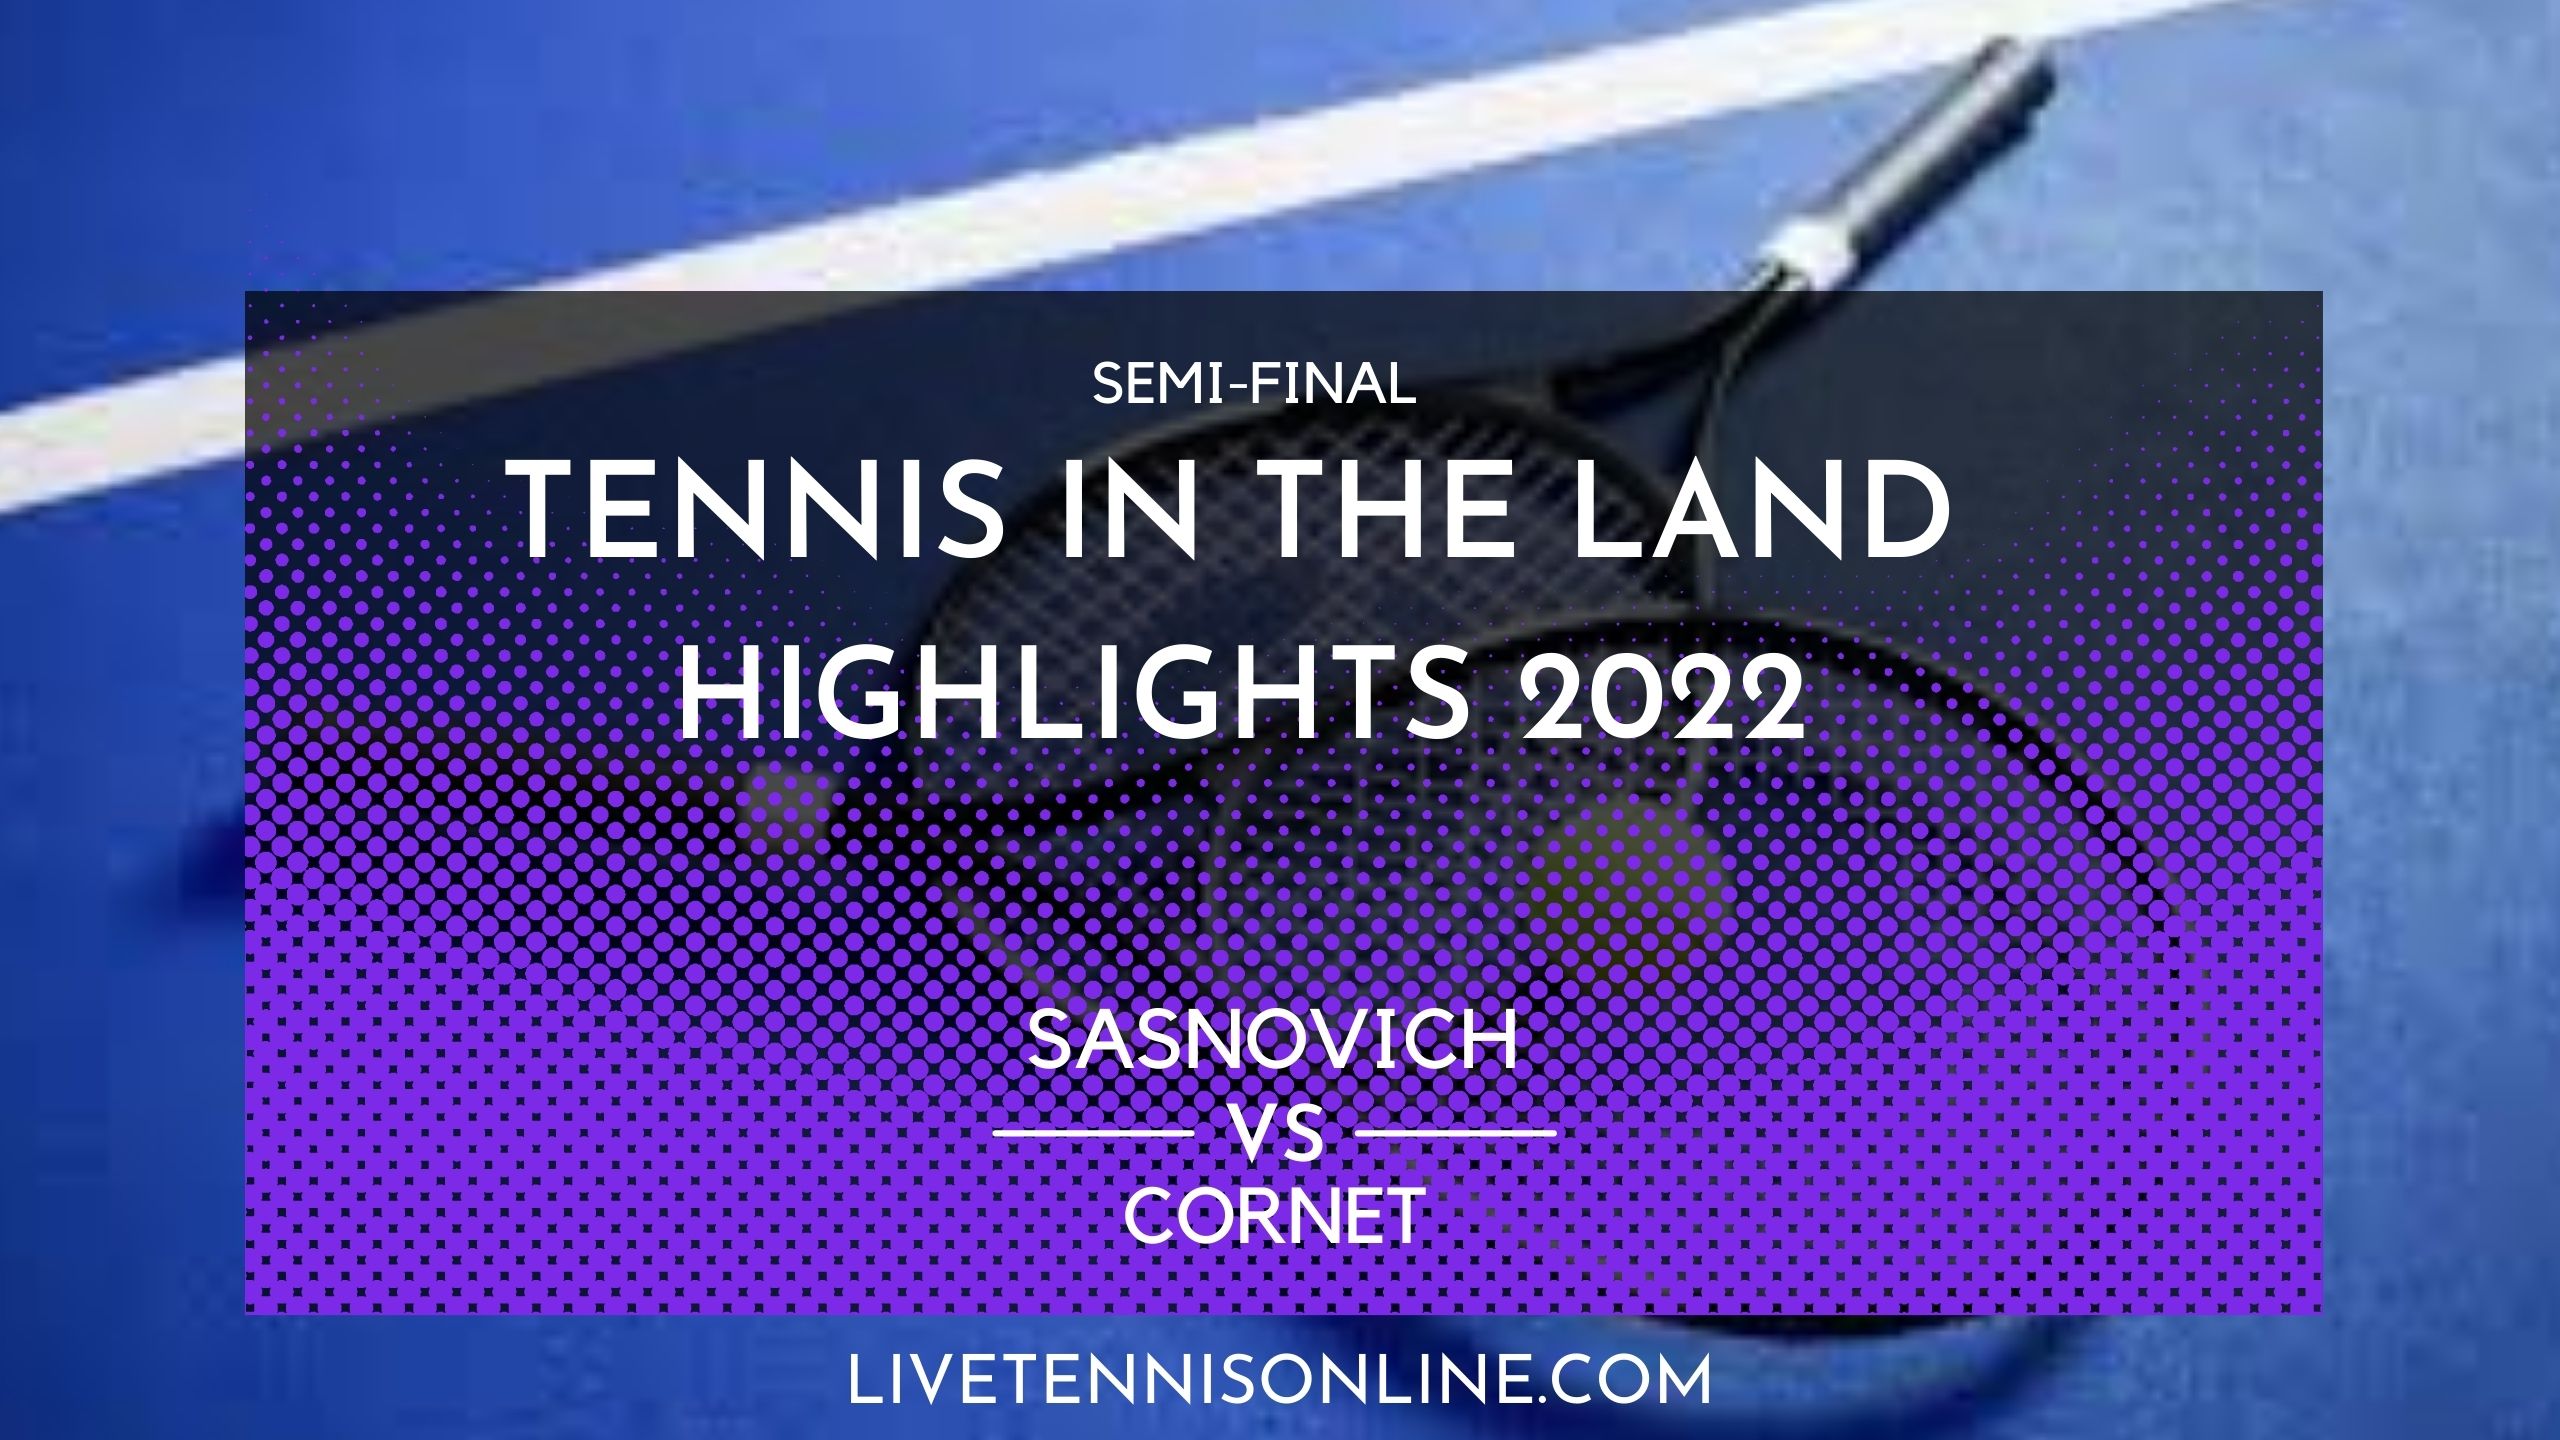 Sasnovich Vs Cornet SF Highlights 2022 Tennis In The Land